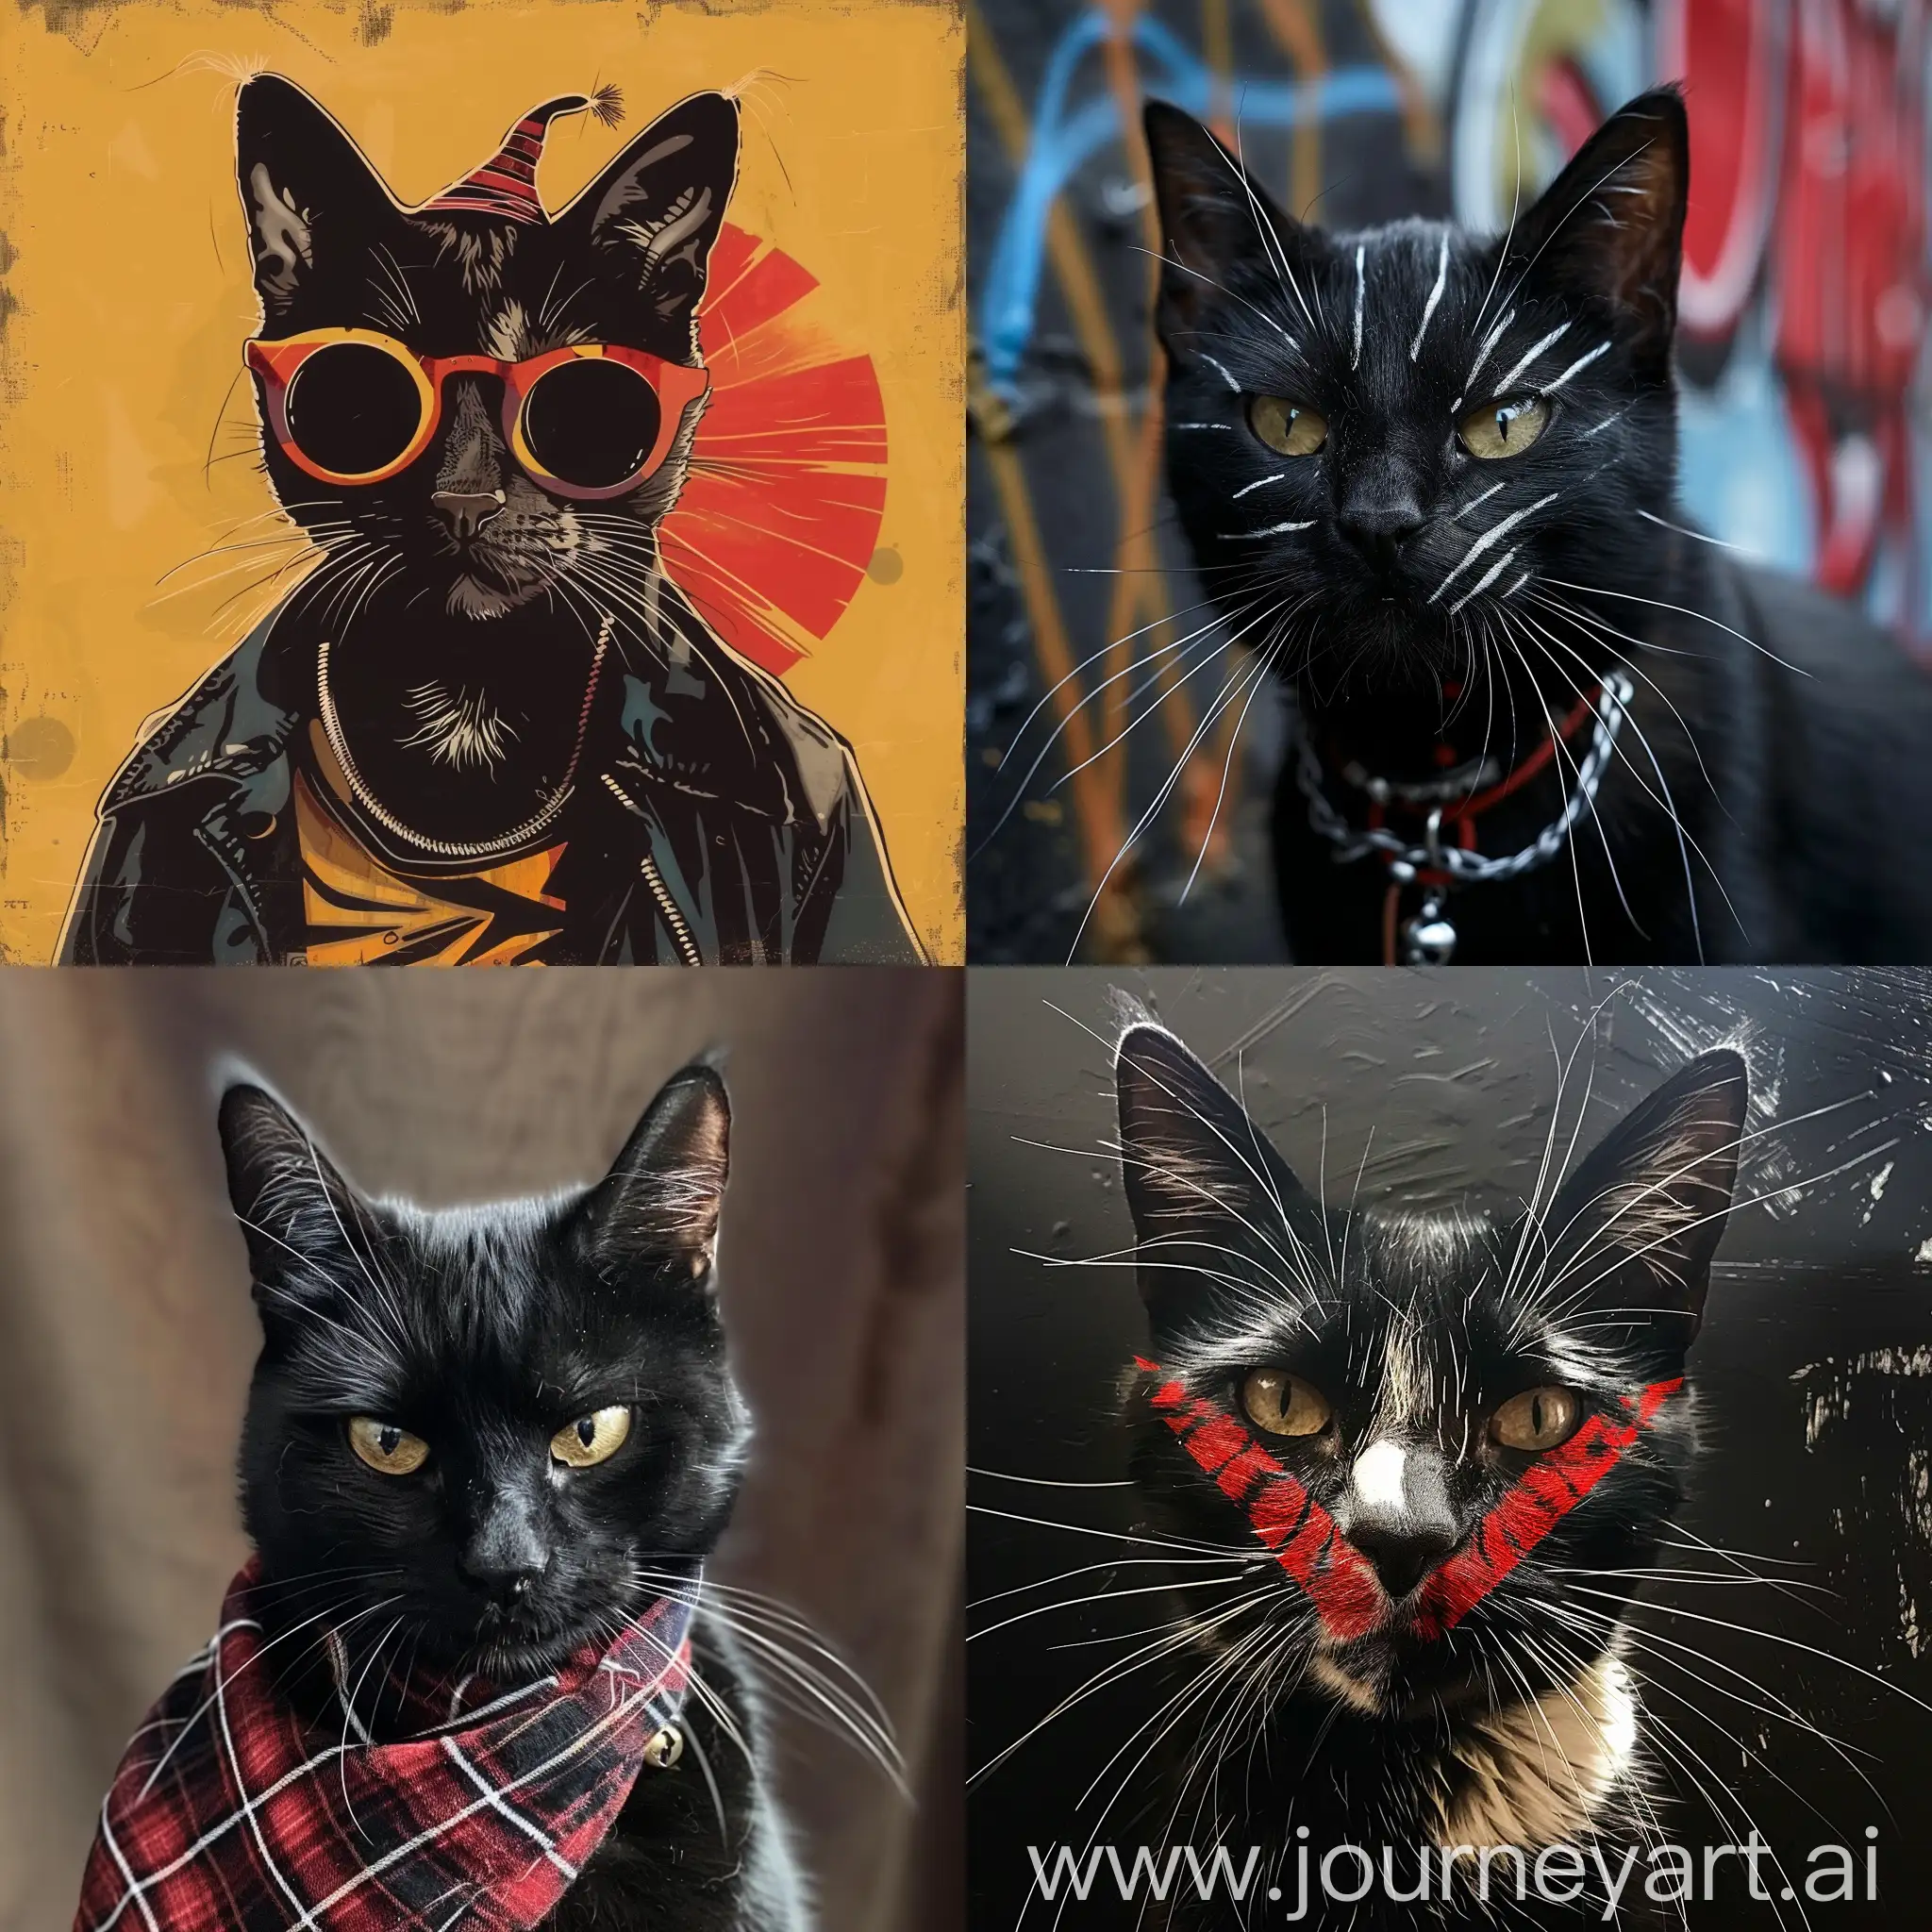 Rebellious-Feline-Portrait-of-a-Skinhead-Cat